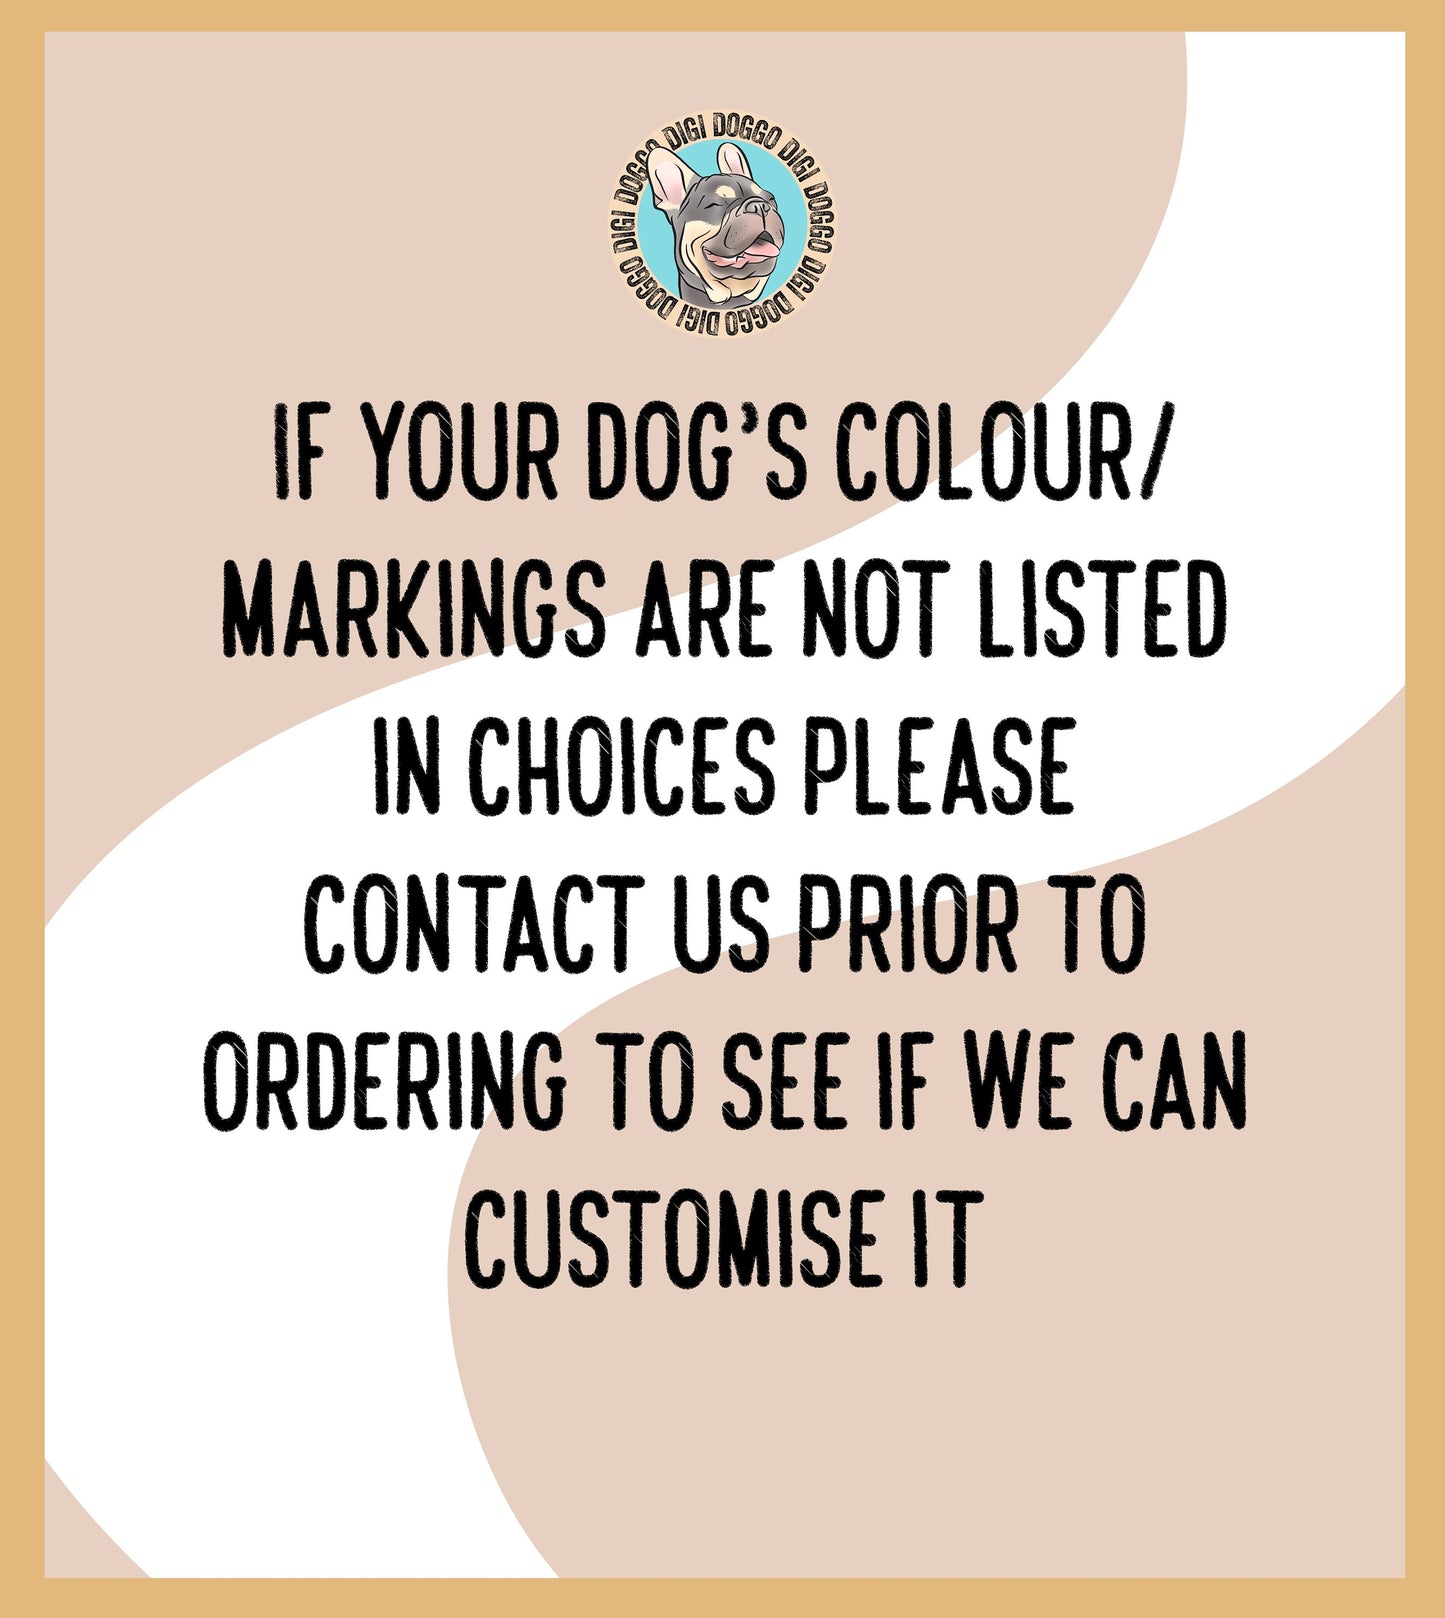 Labrador Personalised Collar/ Labrador Face Pattern Collar/ Customisable Sublimation Dog Collar/ Labrador Dog Mum/ Labrador Art Lover Gift